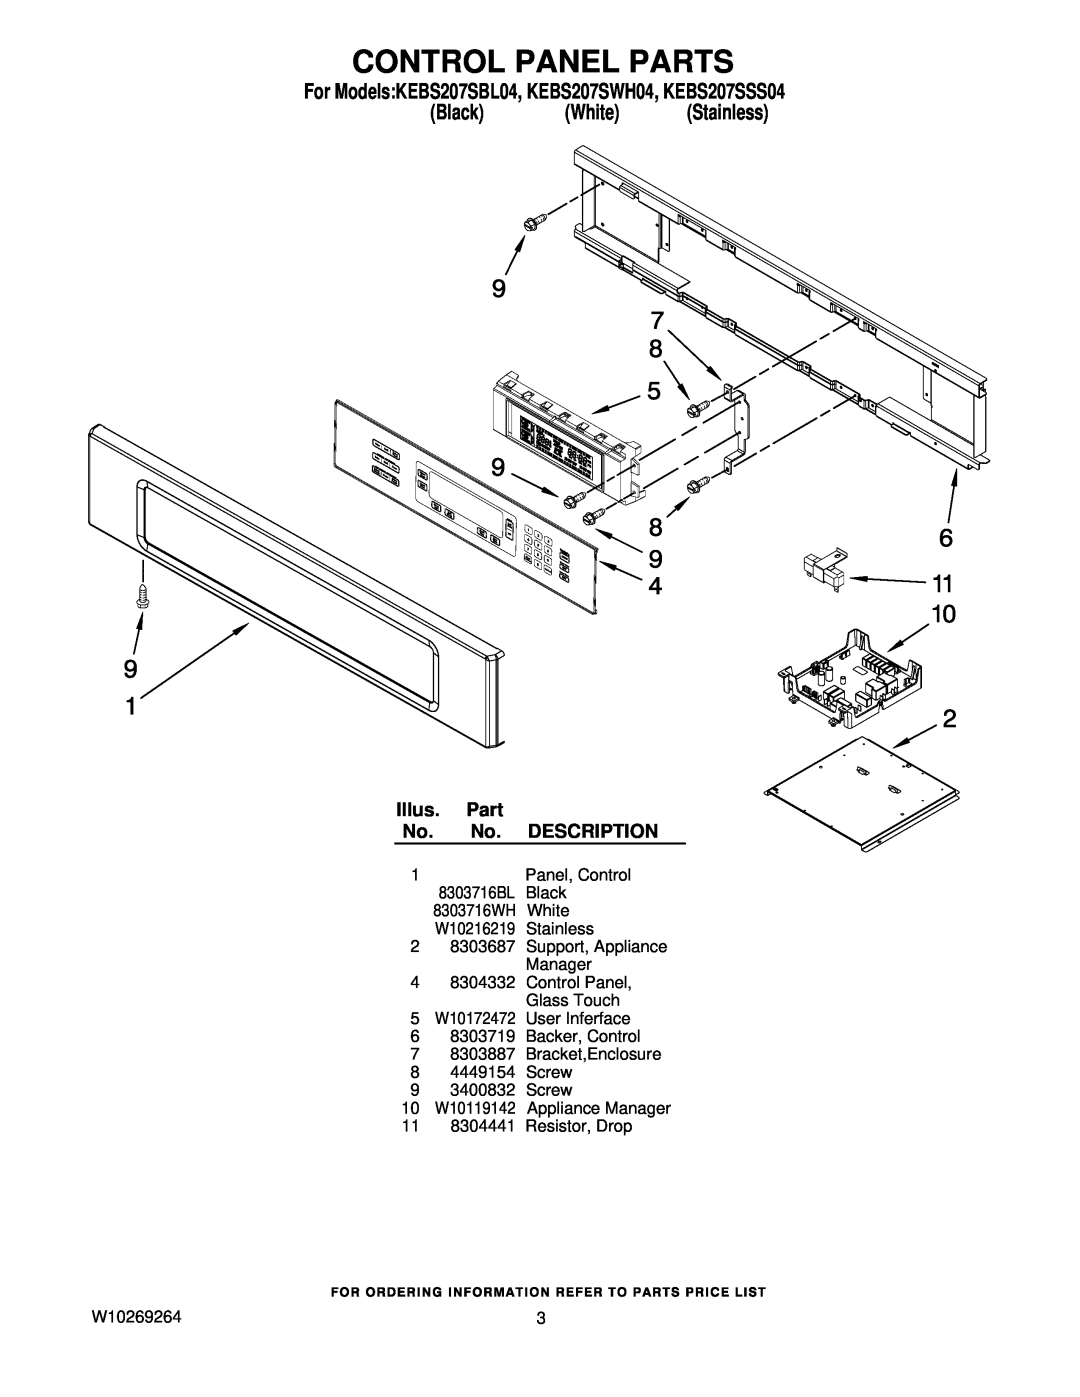 KitchenAid manual Control Panel Parts, Illus, Description, For ModelsKEBS207SBL04, KEBS207SWH04, KEBS207SSS04 